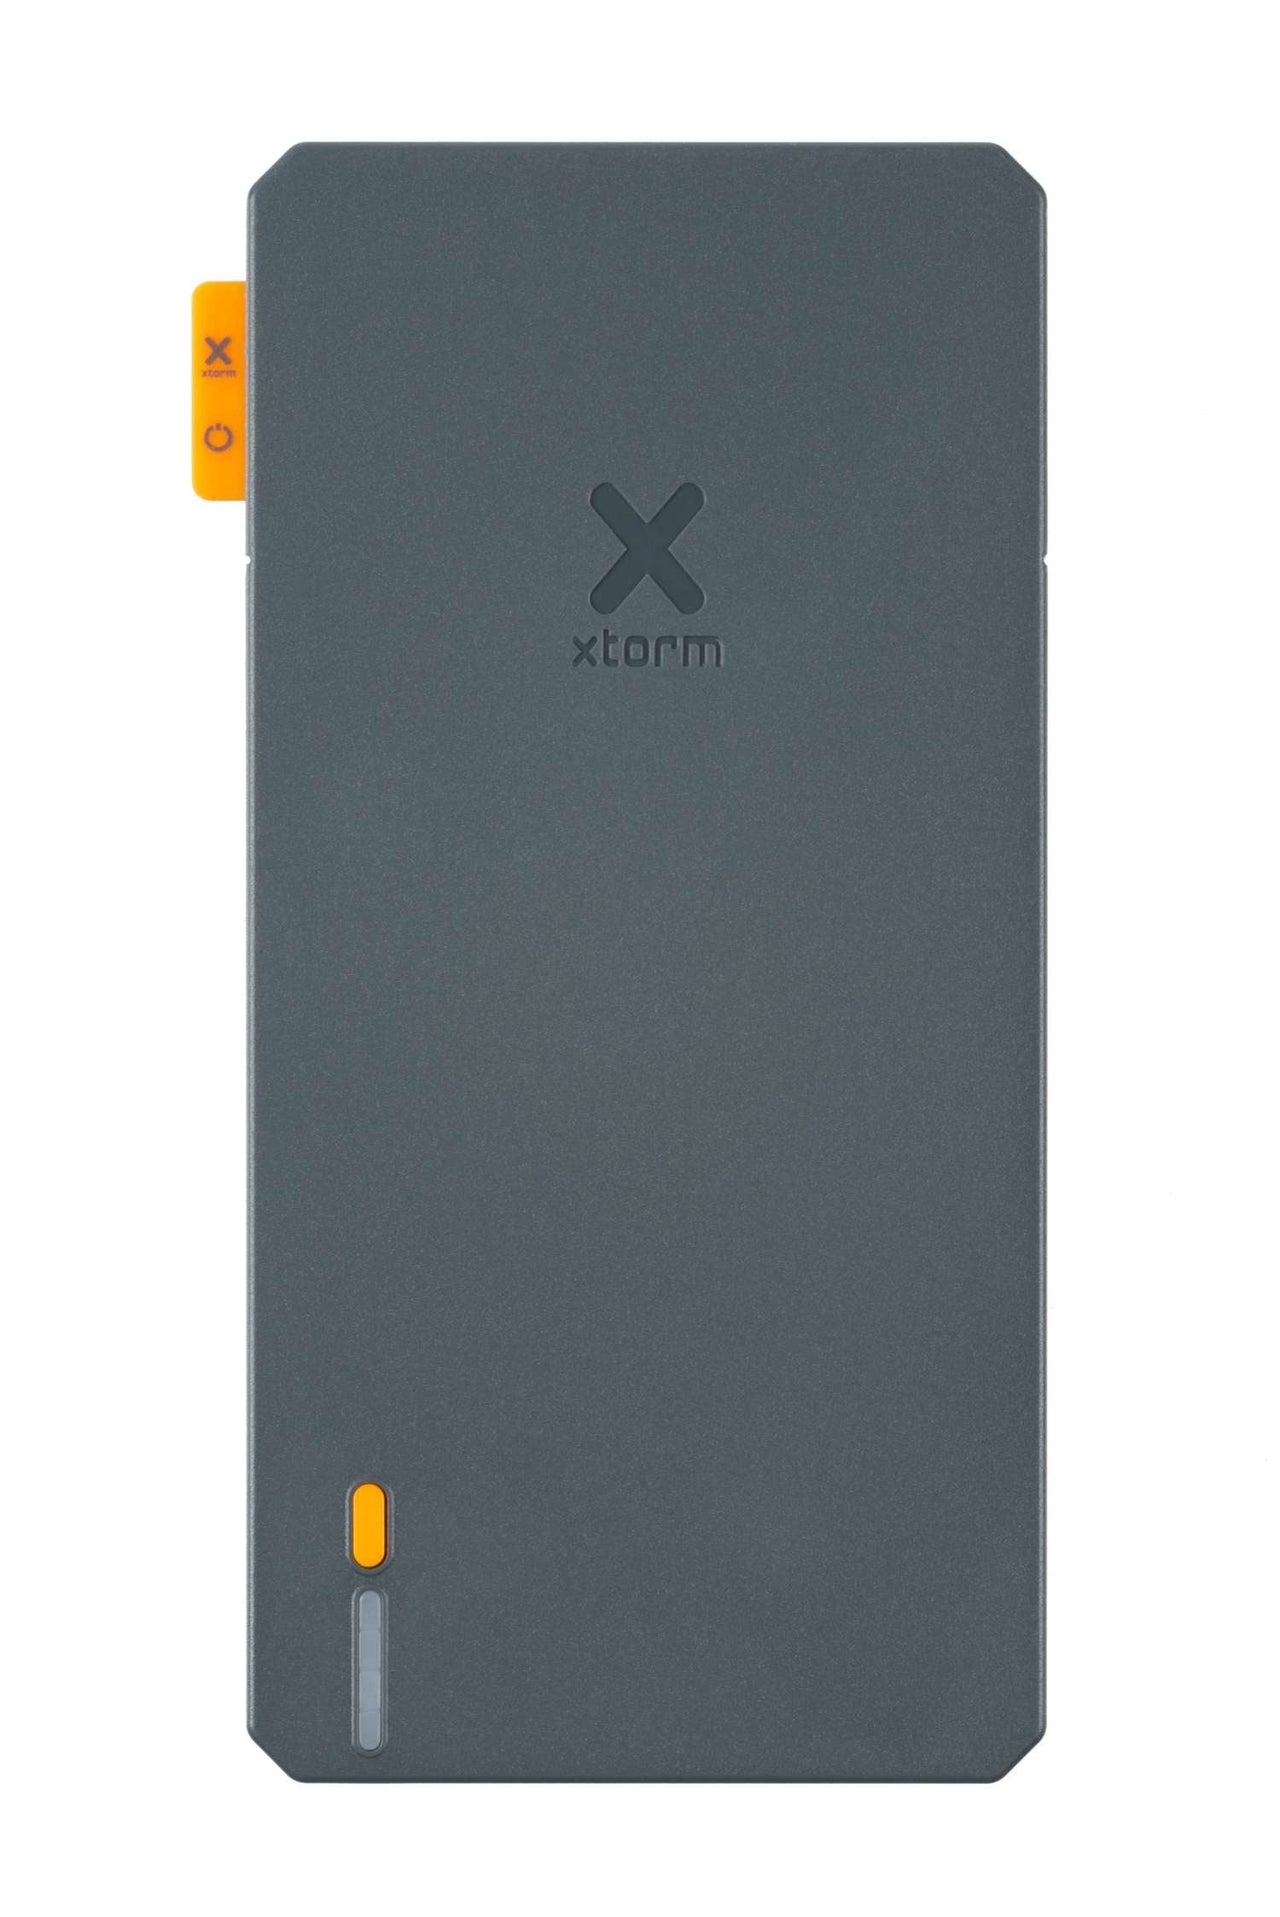 Xtorm Essential Powerbank 20.000 mAh